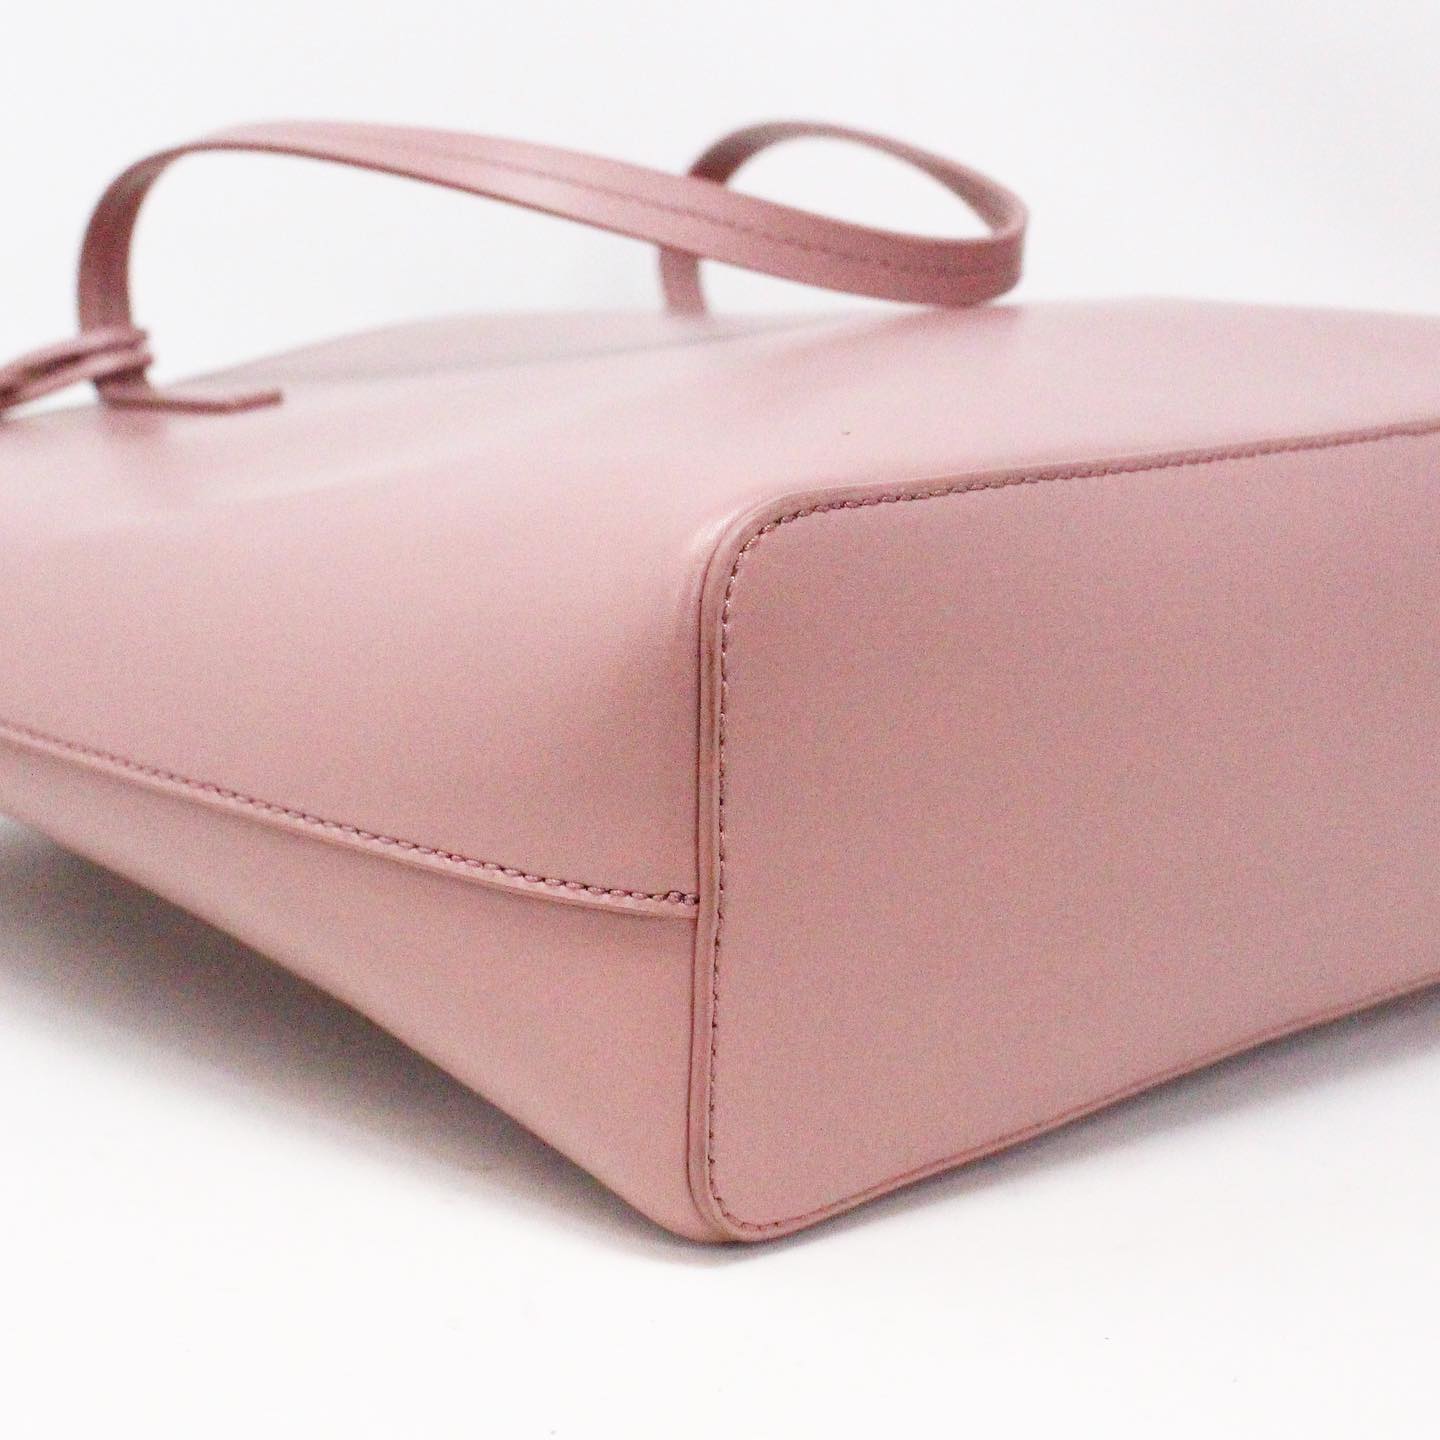 Kate Spade / Tote / Handbag / Pastel Pink / Limited